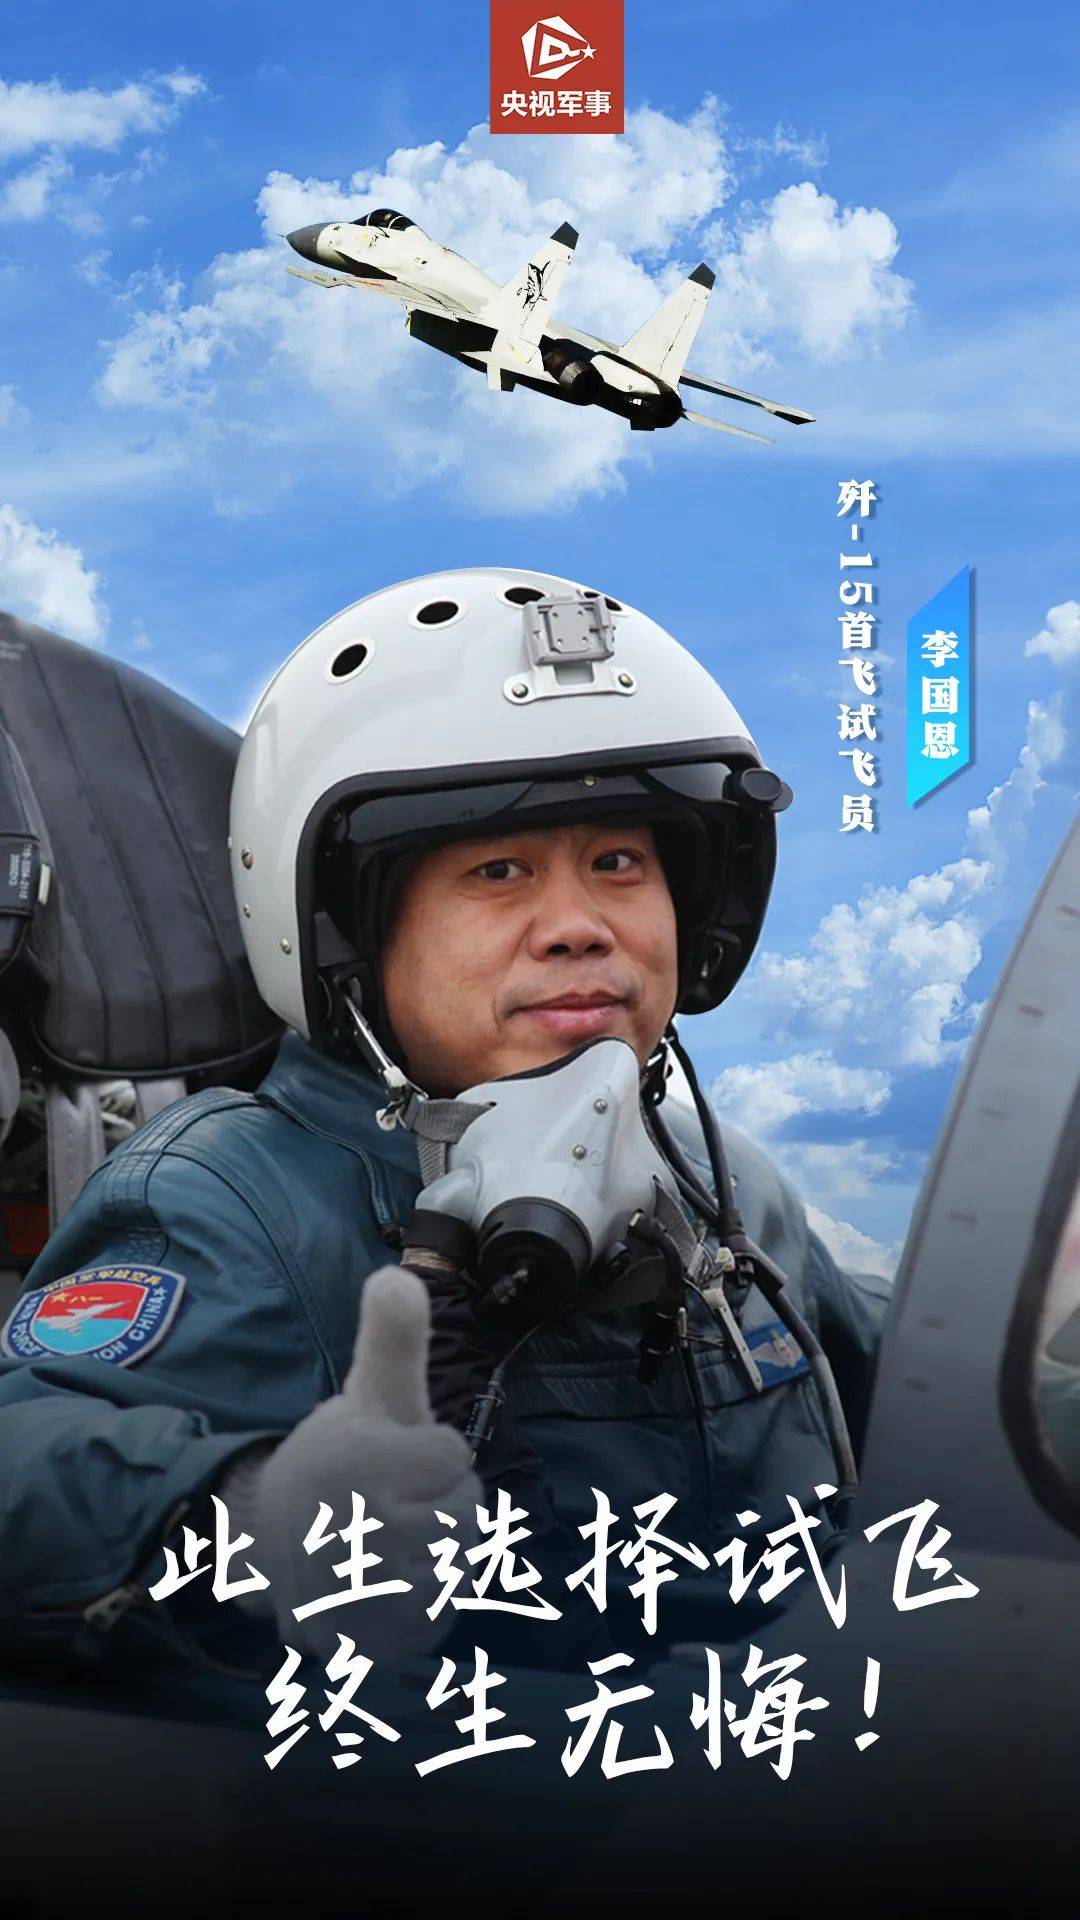 CG图 | 中国垂直起降战机的失败尝试 - 知乎